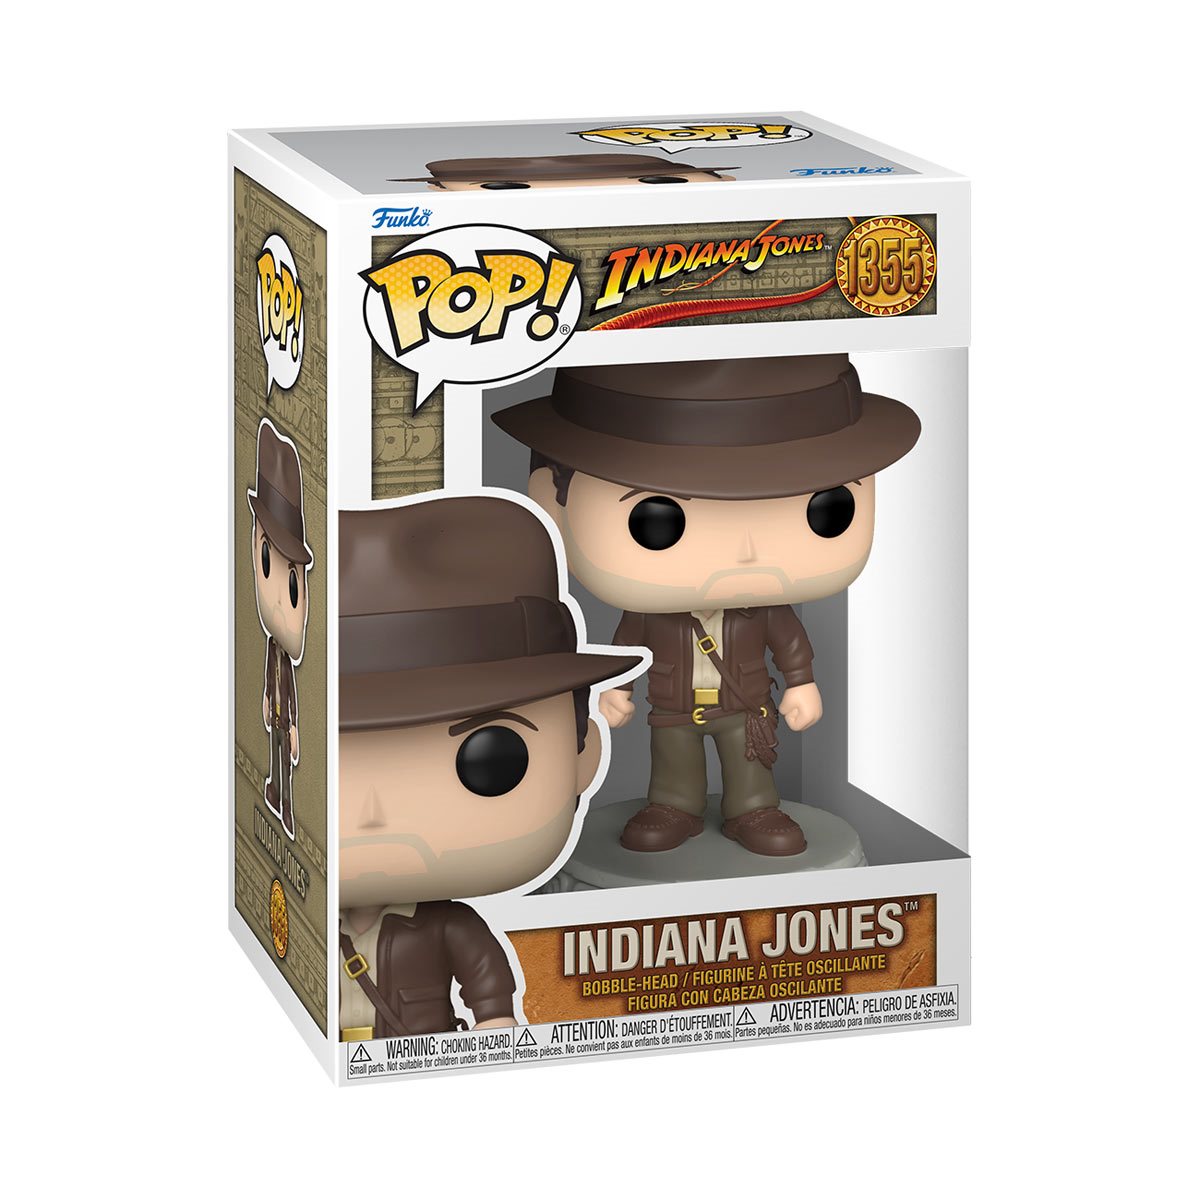 Indiana Jones and the Raiders of the Lost Ark Indiana Jones with Jacket Pop! Vinyl Figure #1355